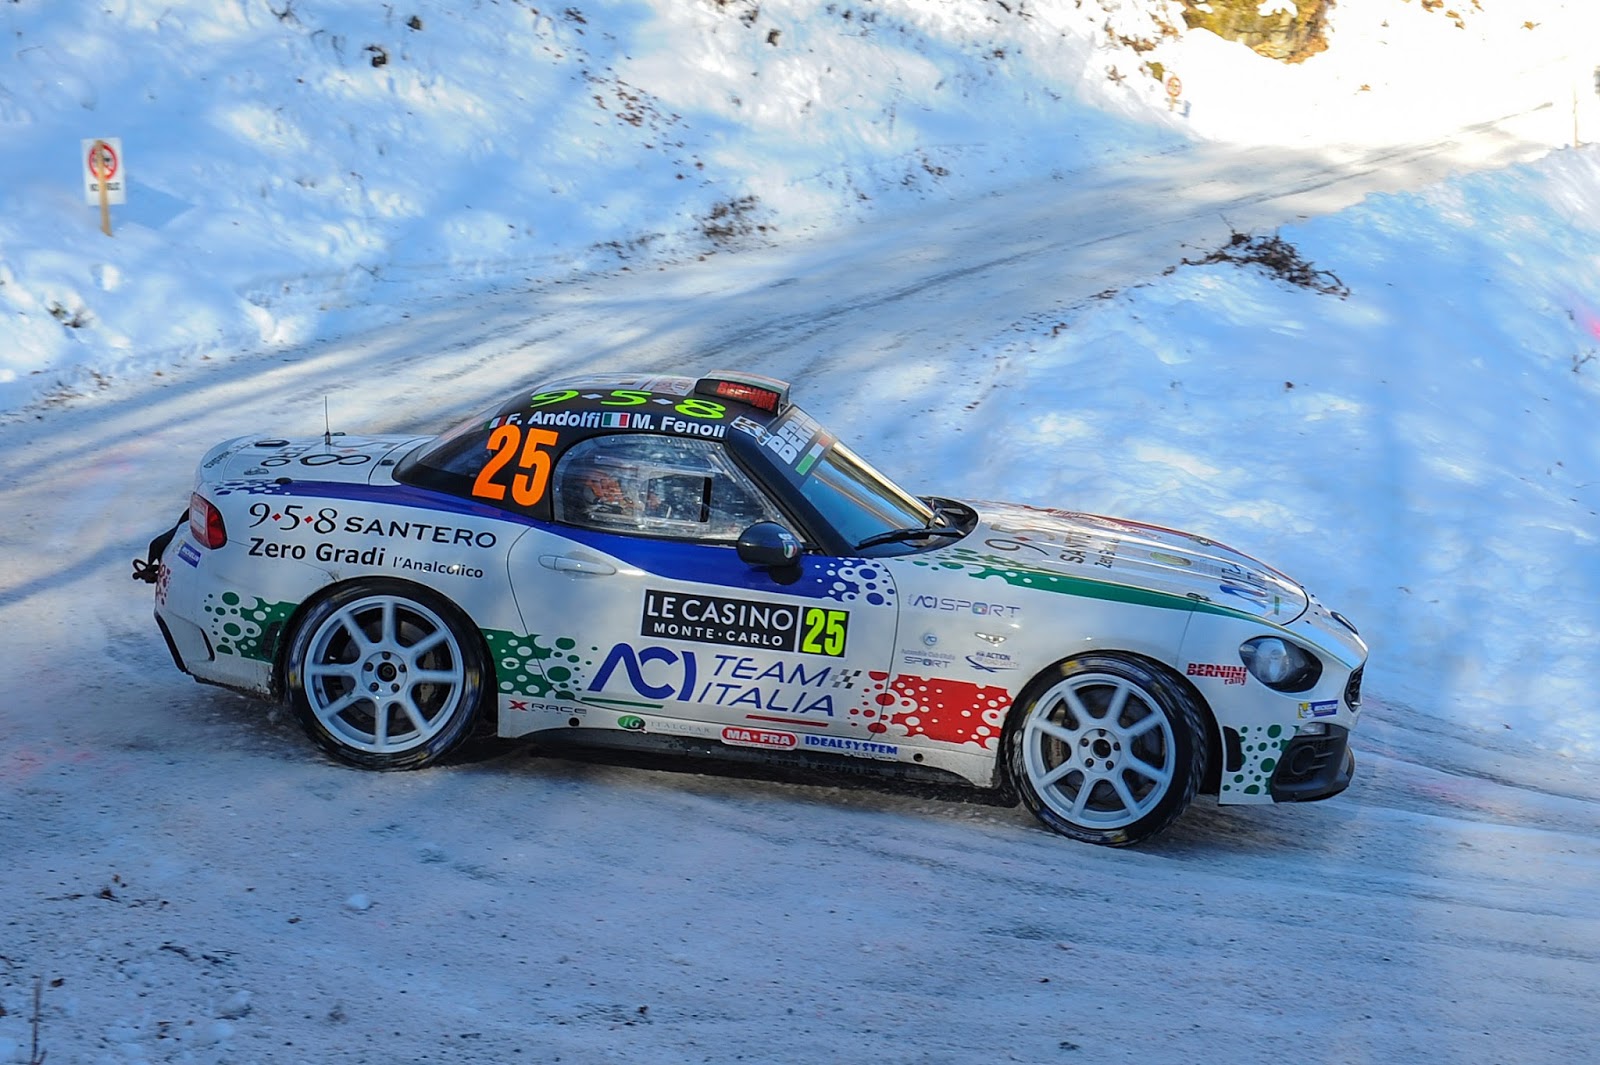 170123 Abarth Andolfi Θετική παρουσία για το Abarth 124 rally στην αγωνιστική του πρεμιέρα στο 85ο Rally του Monte Carlo